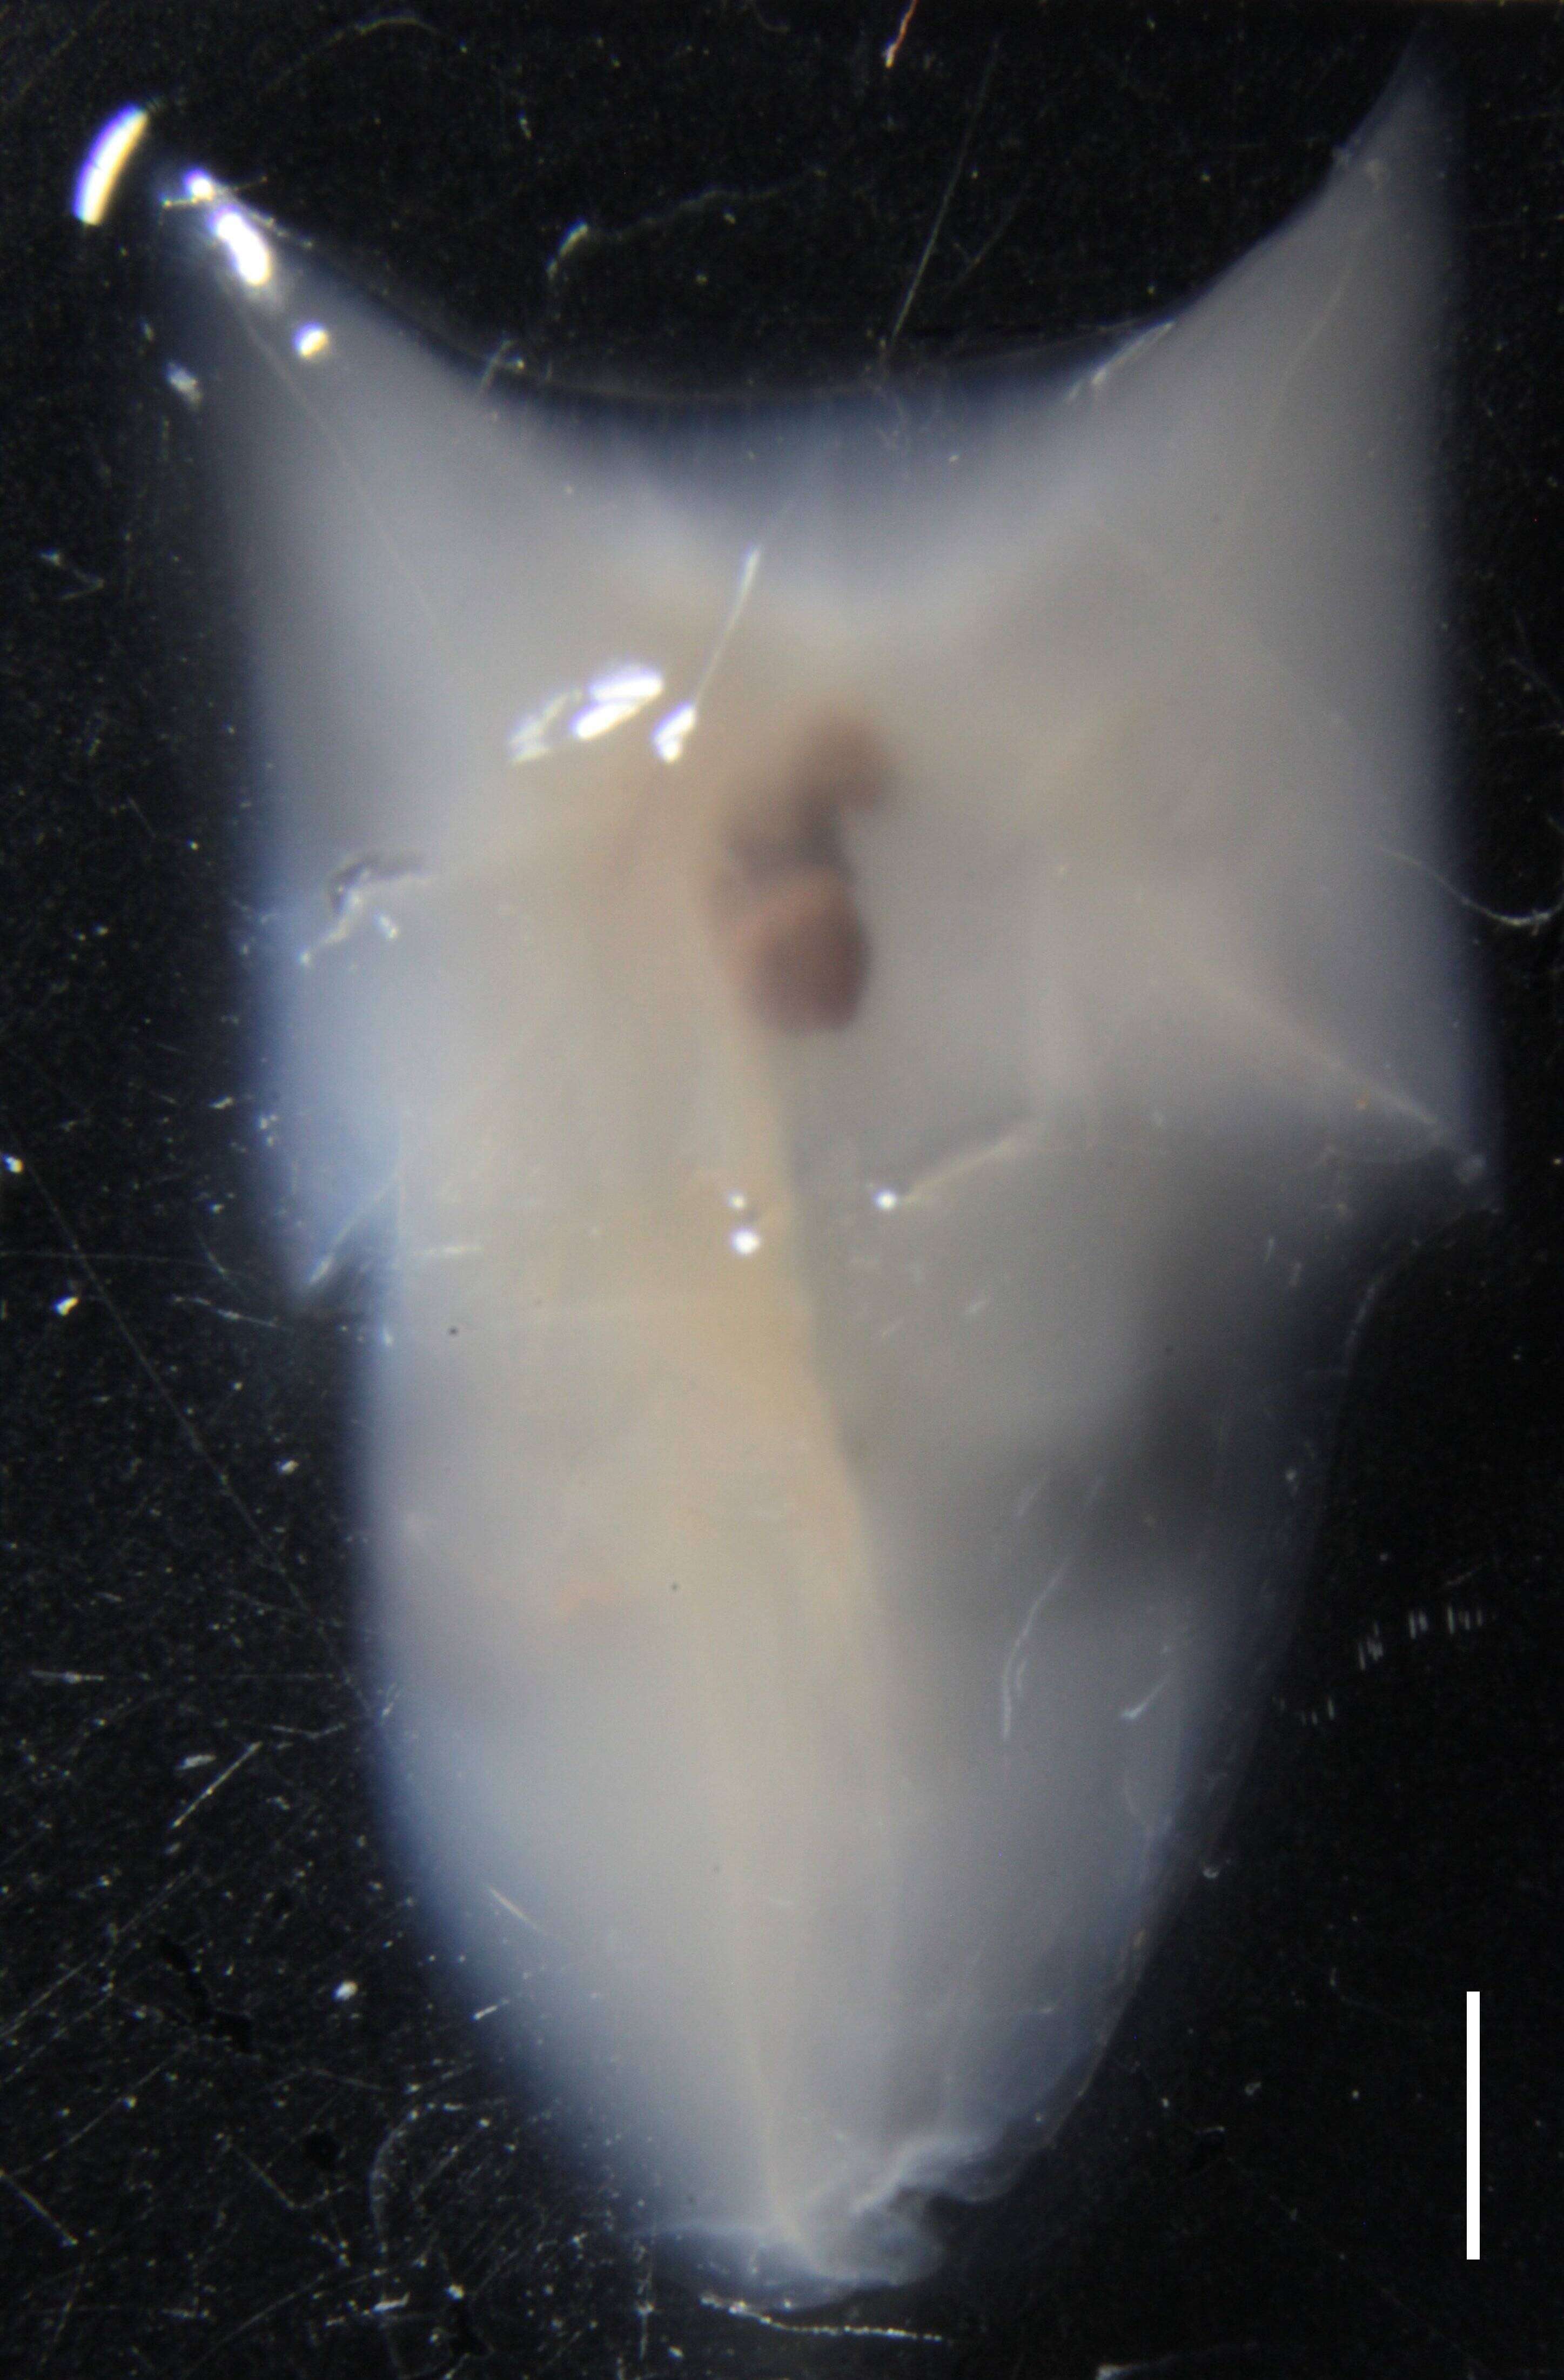 Image of Ceratocymba sagittata (Quoy & Gaimard 1827)